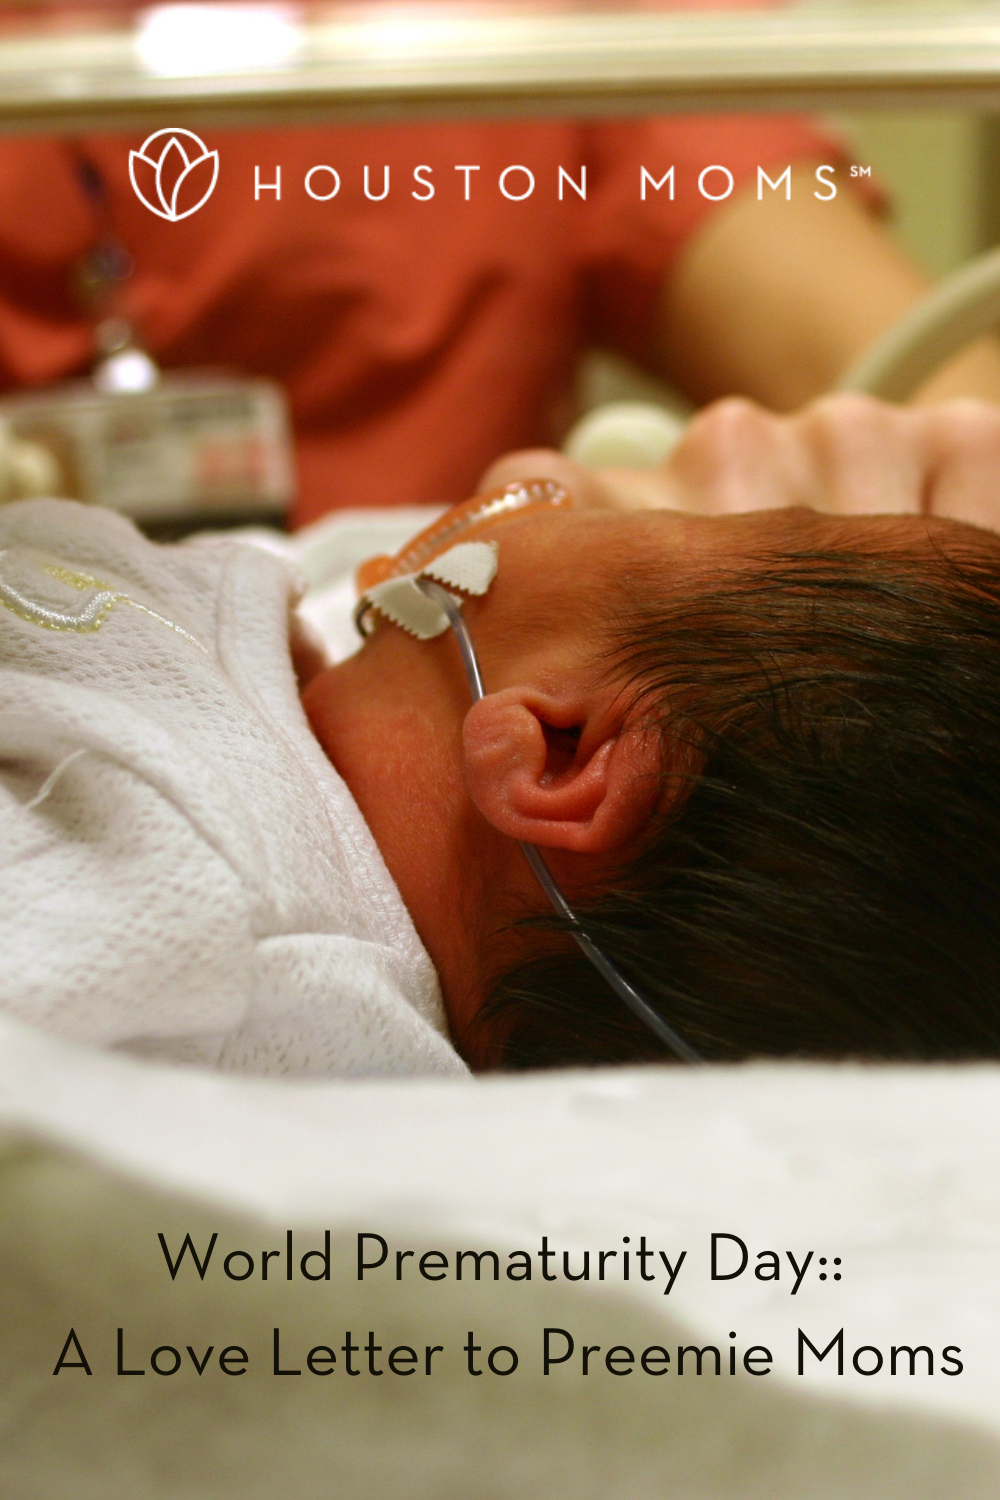 Houston Moms "World Prematurity Day:: A Love Letter to Preemie Moms" #houstonmoms #houstonmomsblog #momsaroundhouston